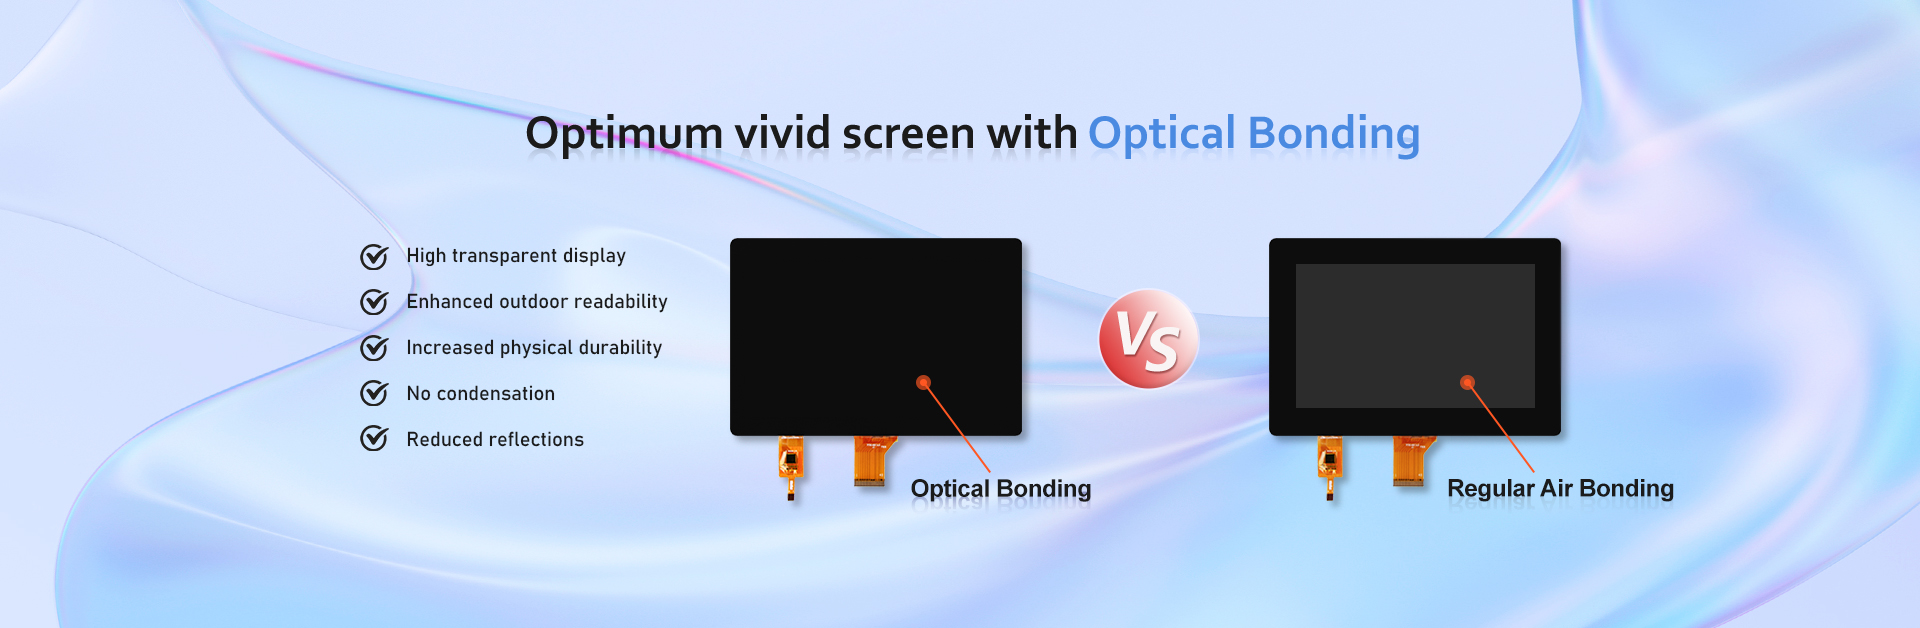 Optimum vivid screen with optical bonding